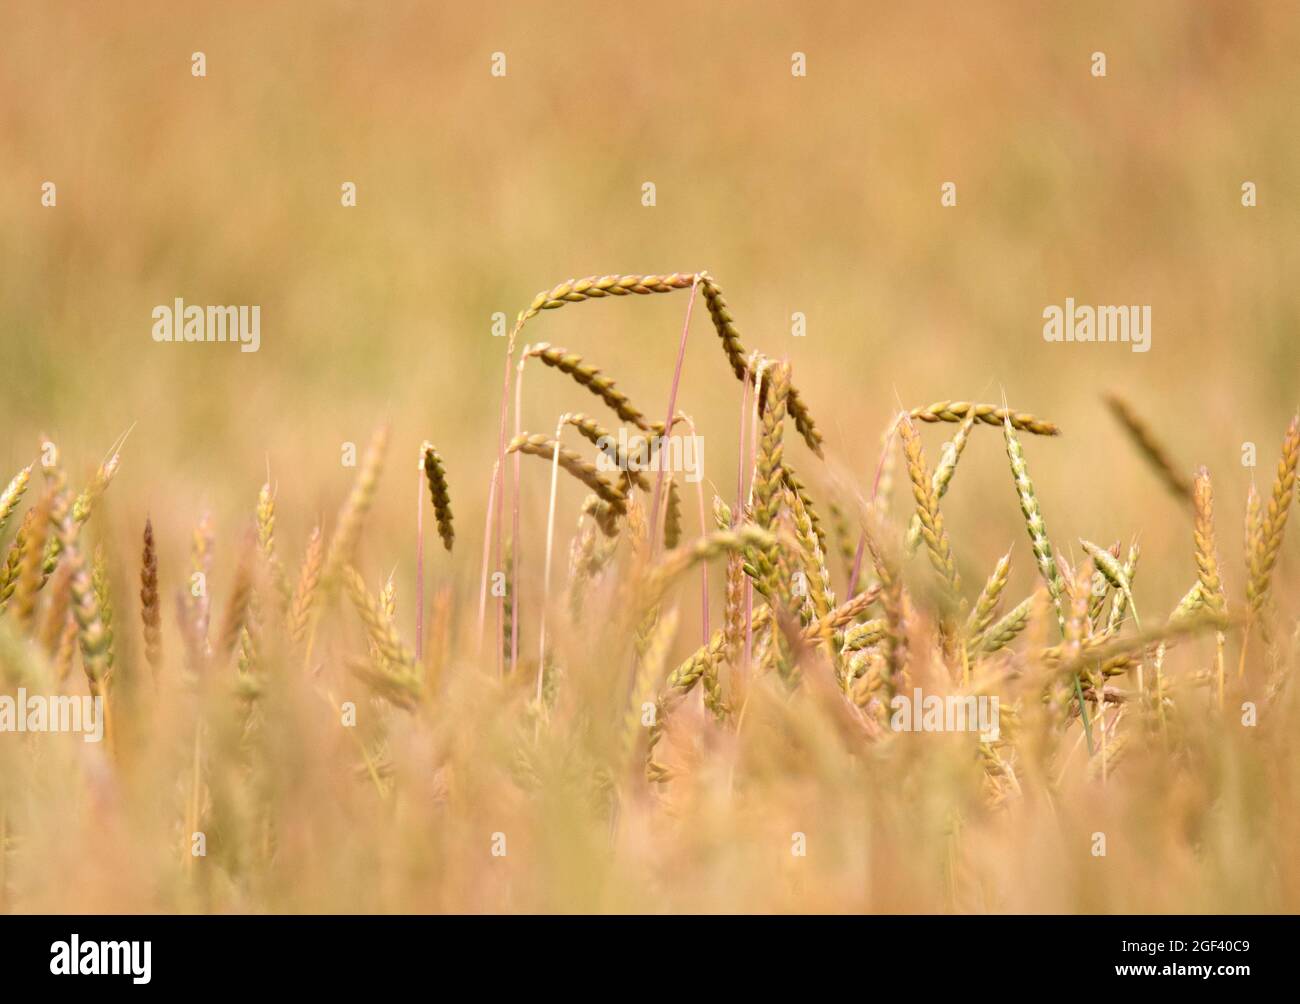 Common Wheat (Triticum aestivum) field Stock Photo